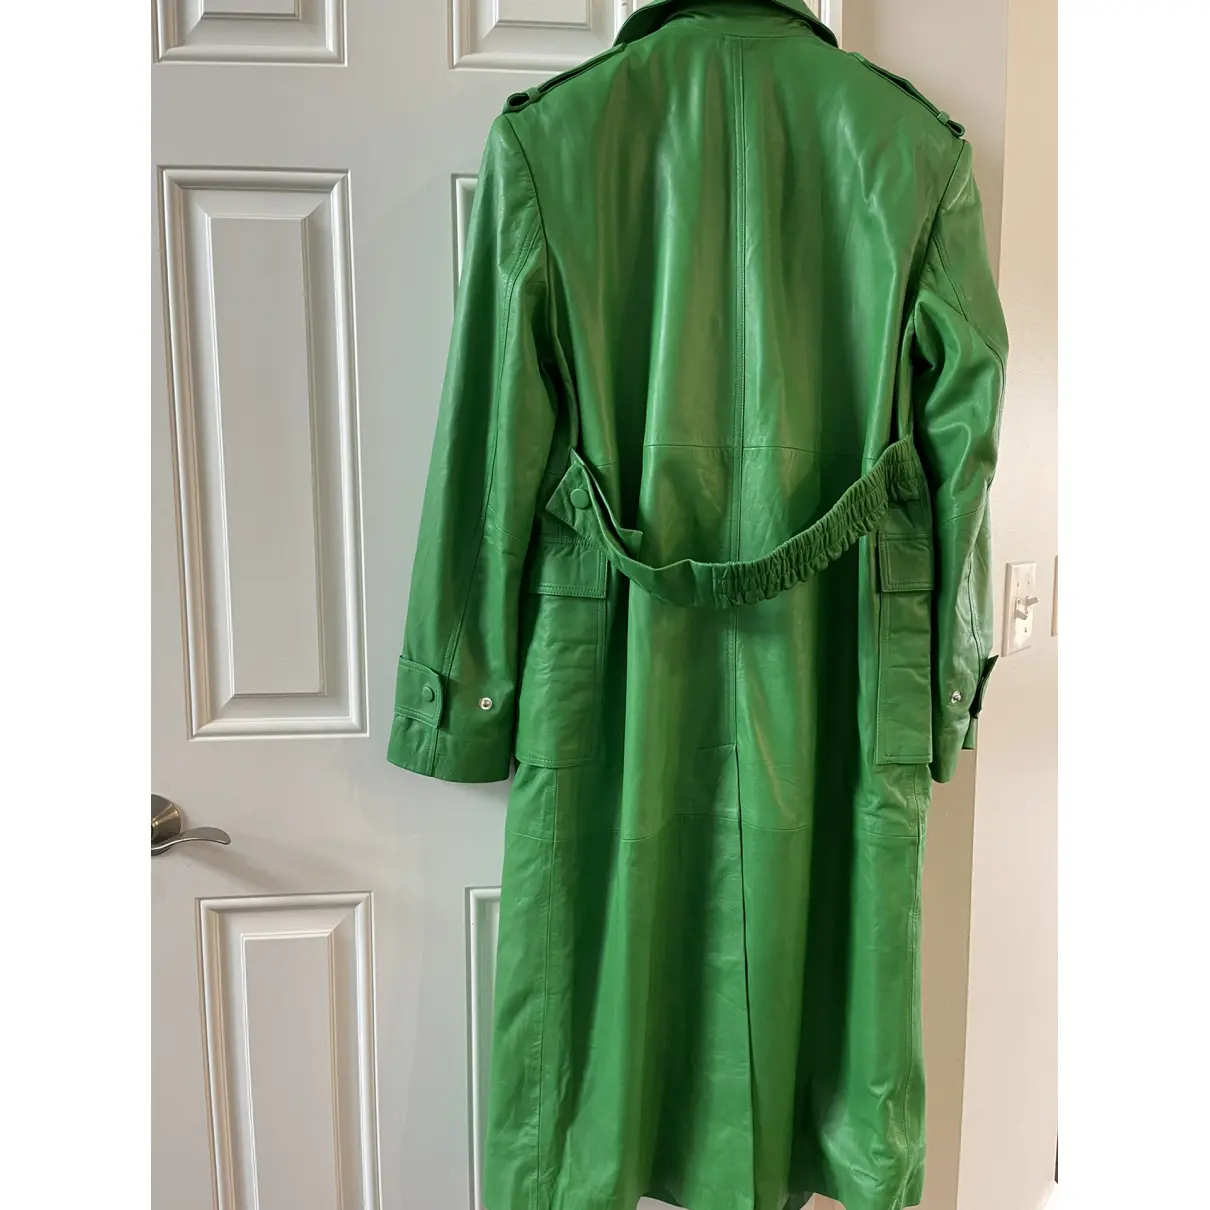 Buy Remain Biger christensen Leather trench coat online